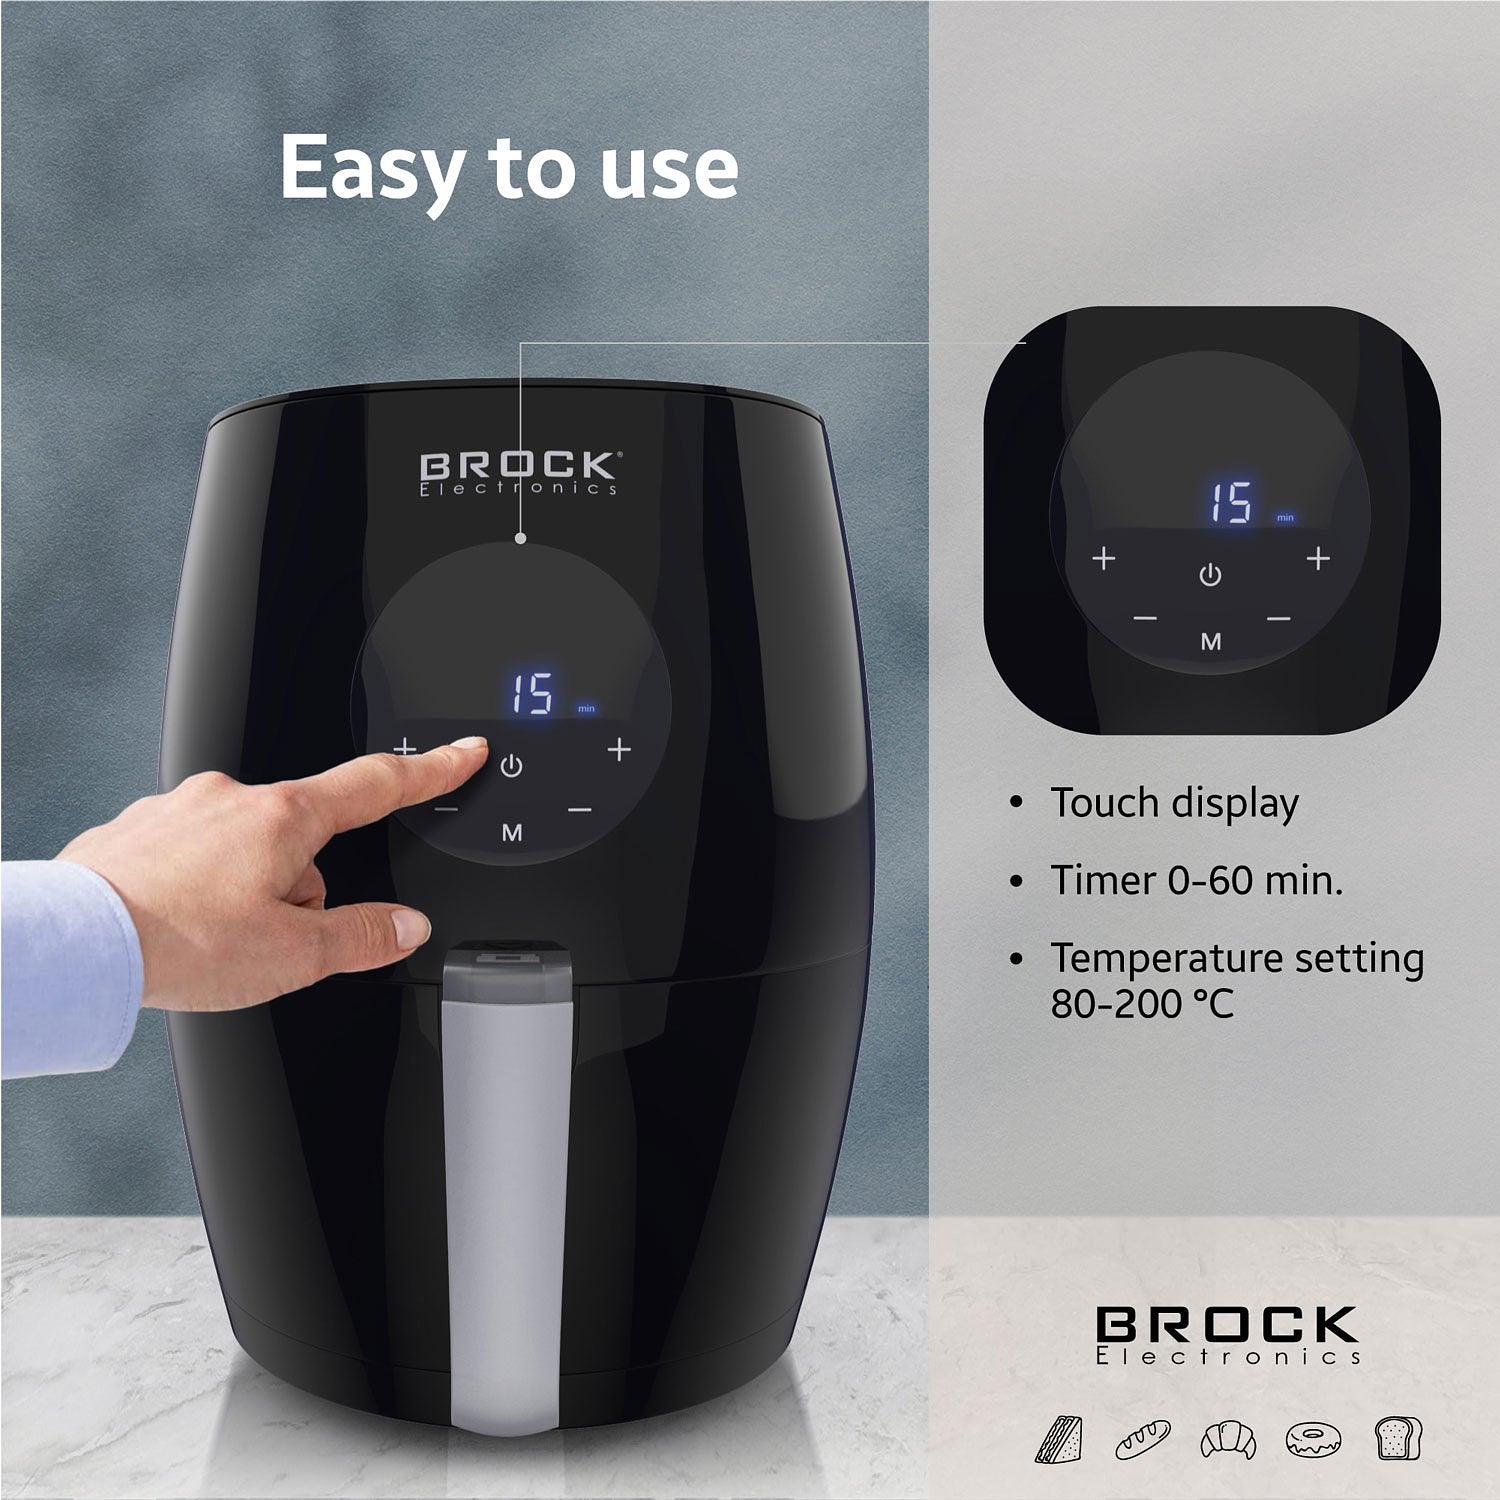 BROCK Electronics Airfryer AFD 3502 BK (3.5 liter, 1200W, Digitaal)